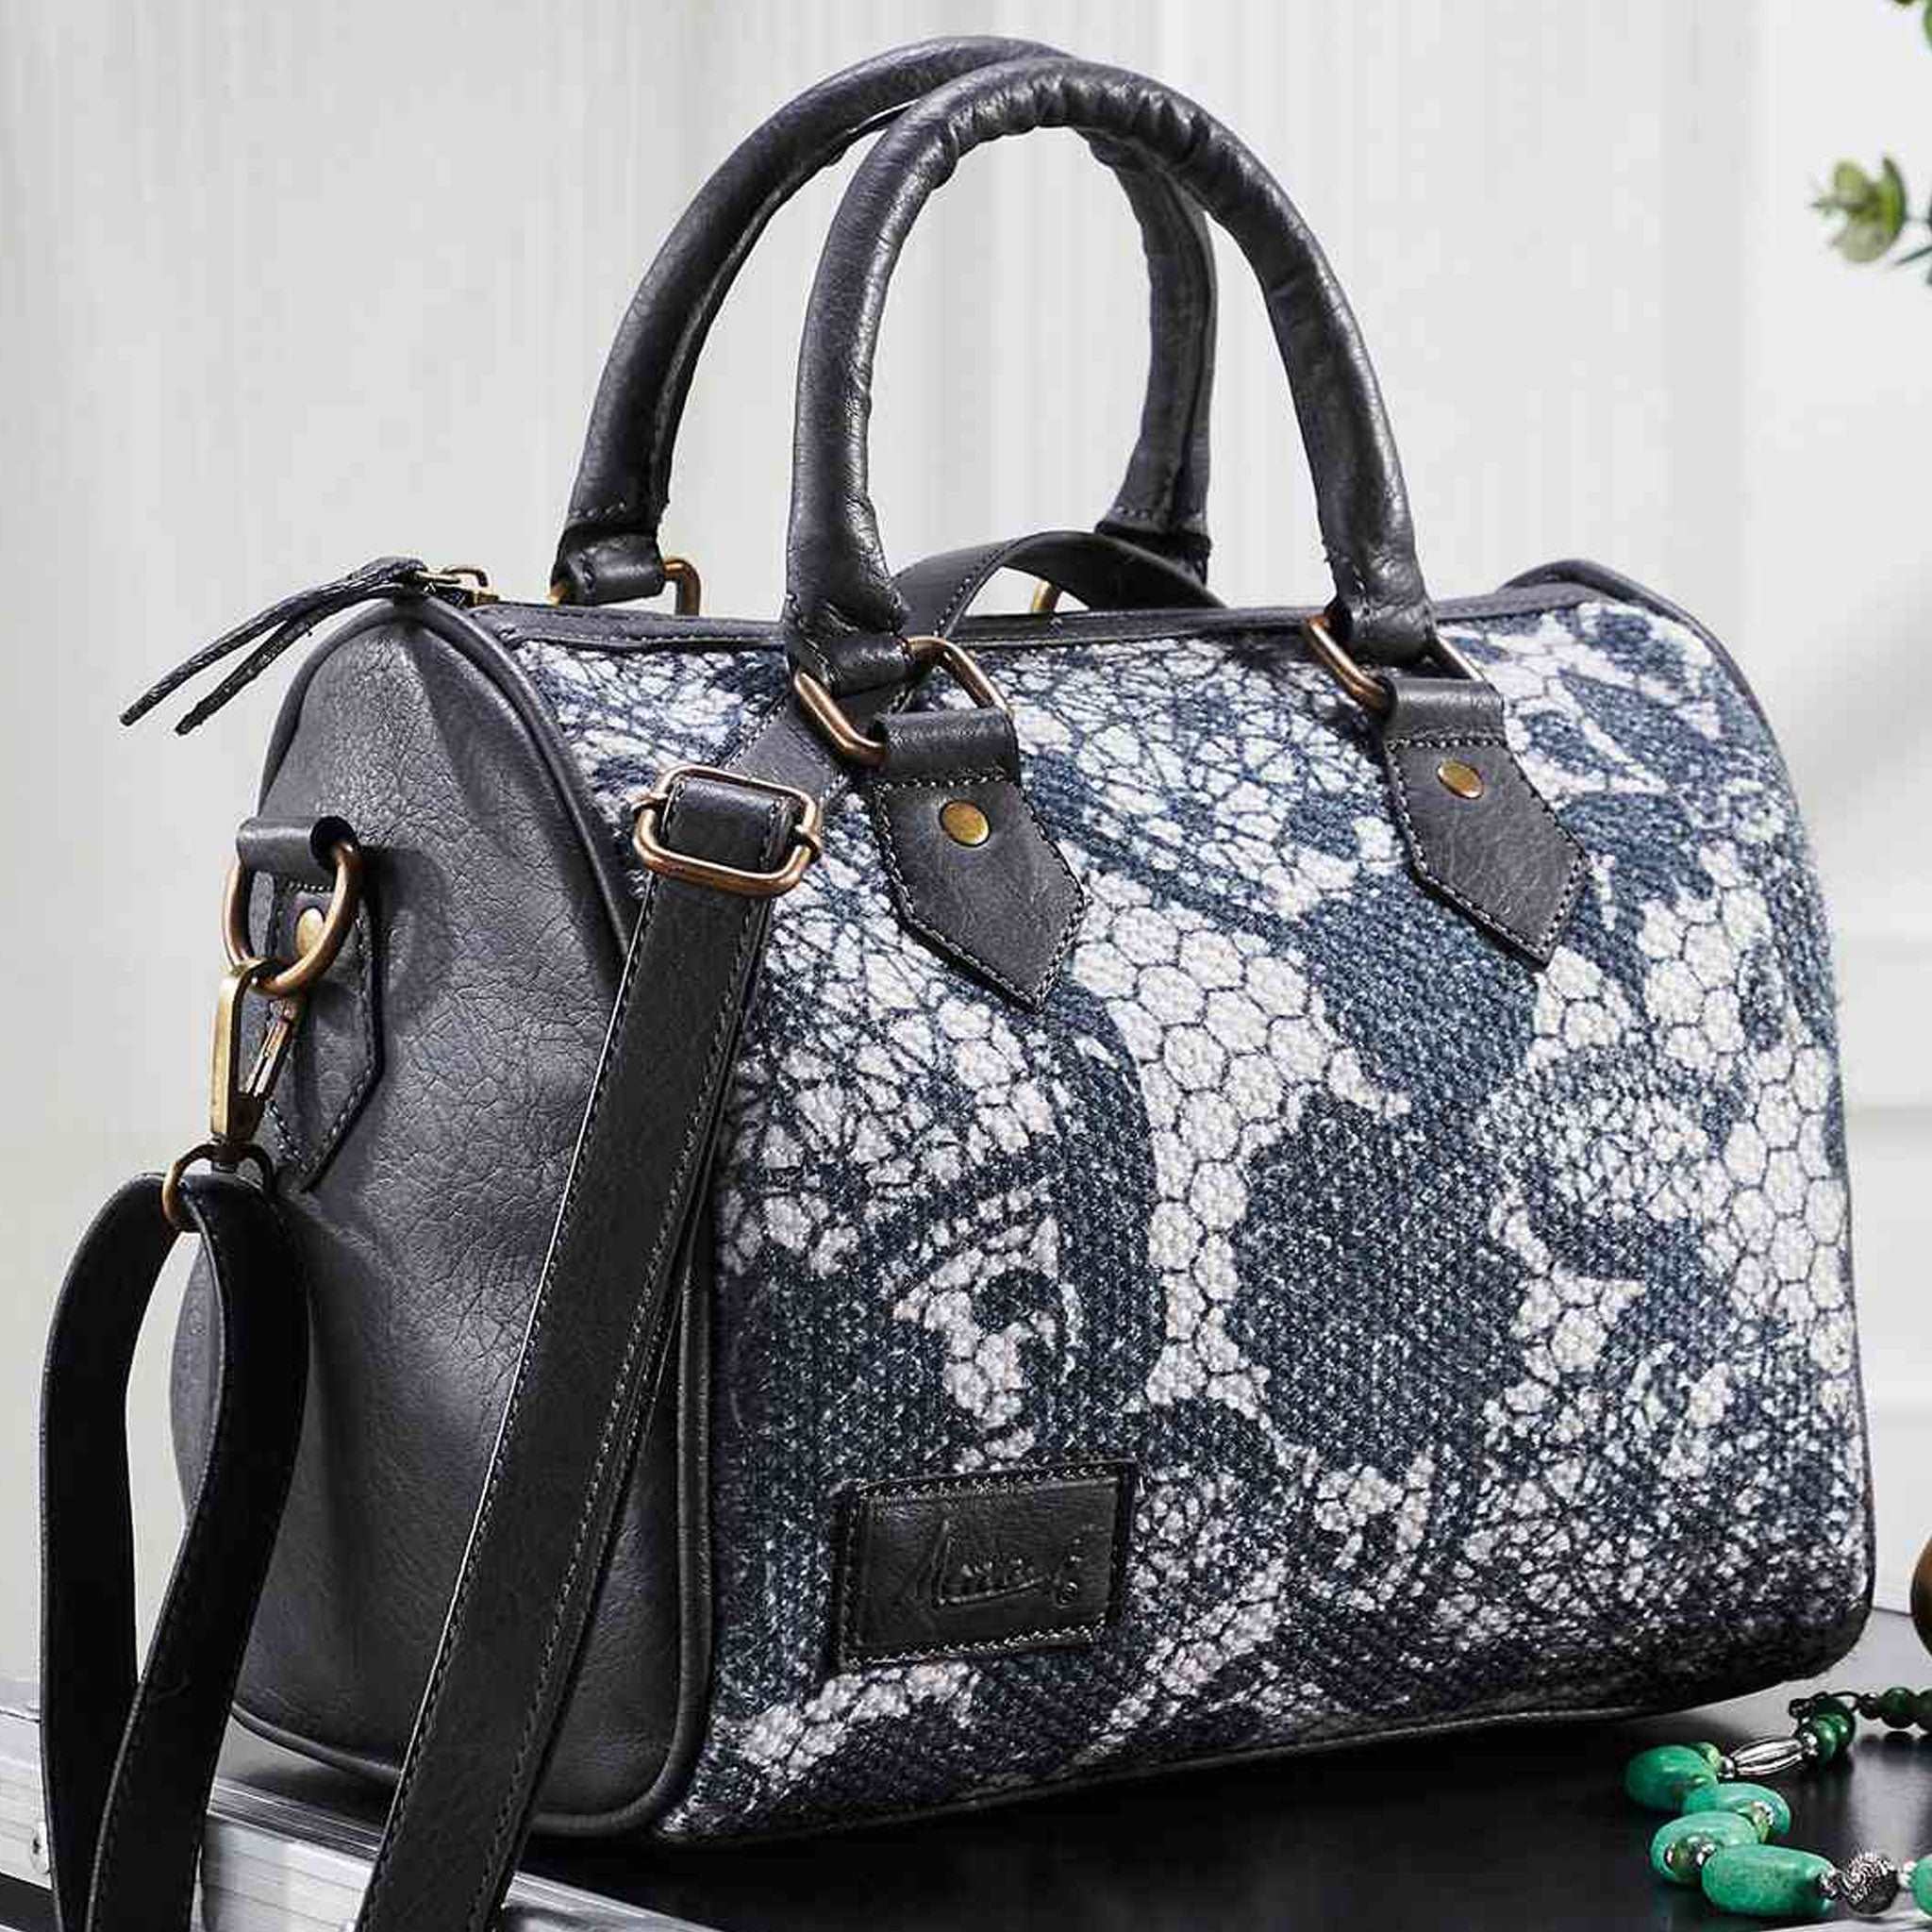 Mona B Canvas Small Vintage Handbag, Shoulder Bag, Crossbody Bag For Shopping, Travel With Stylish Design For Women (Grey, Kilim) - M-7003 - Handbag by Mona-B - Backpack, Flash Sale, Flat40, Sale, 